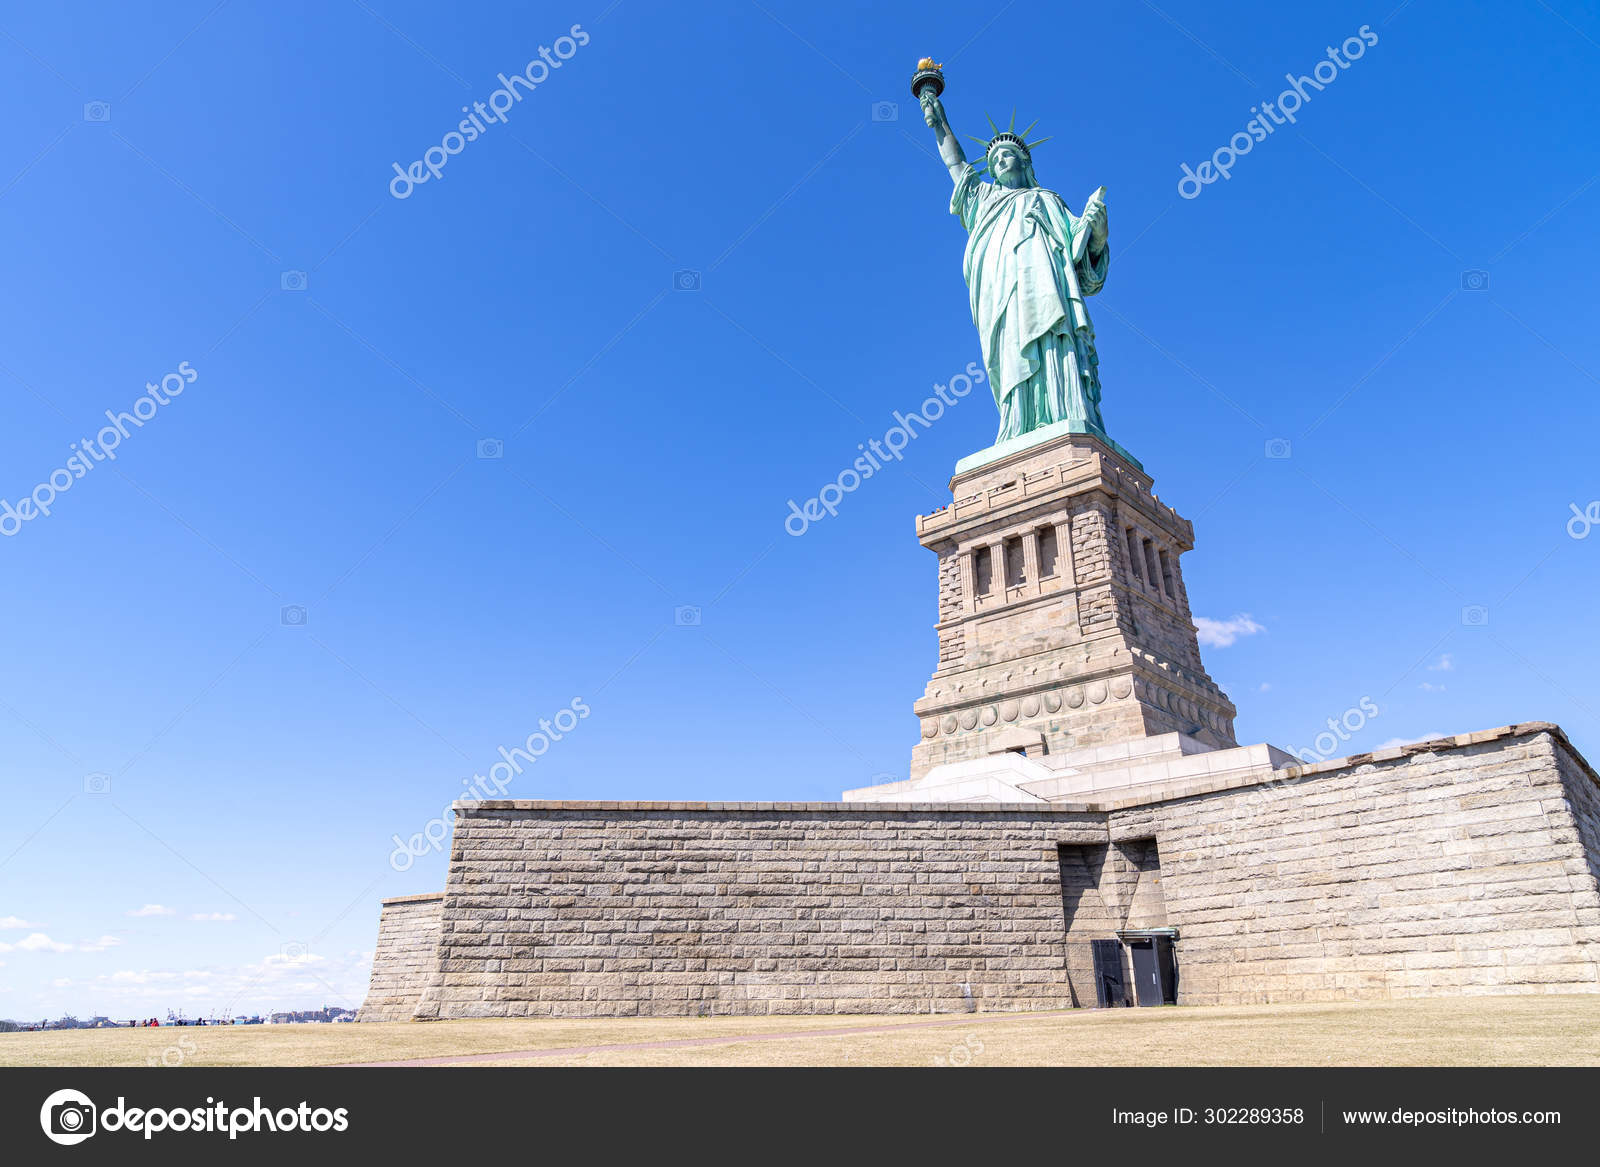 Modell USA Amerika New York City Freiheitsstatue Statue of Liberty,38 cm !